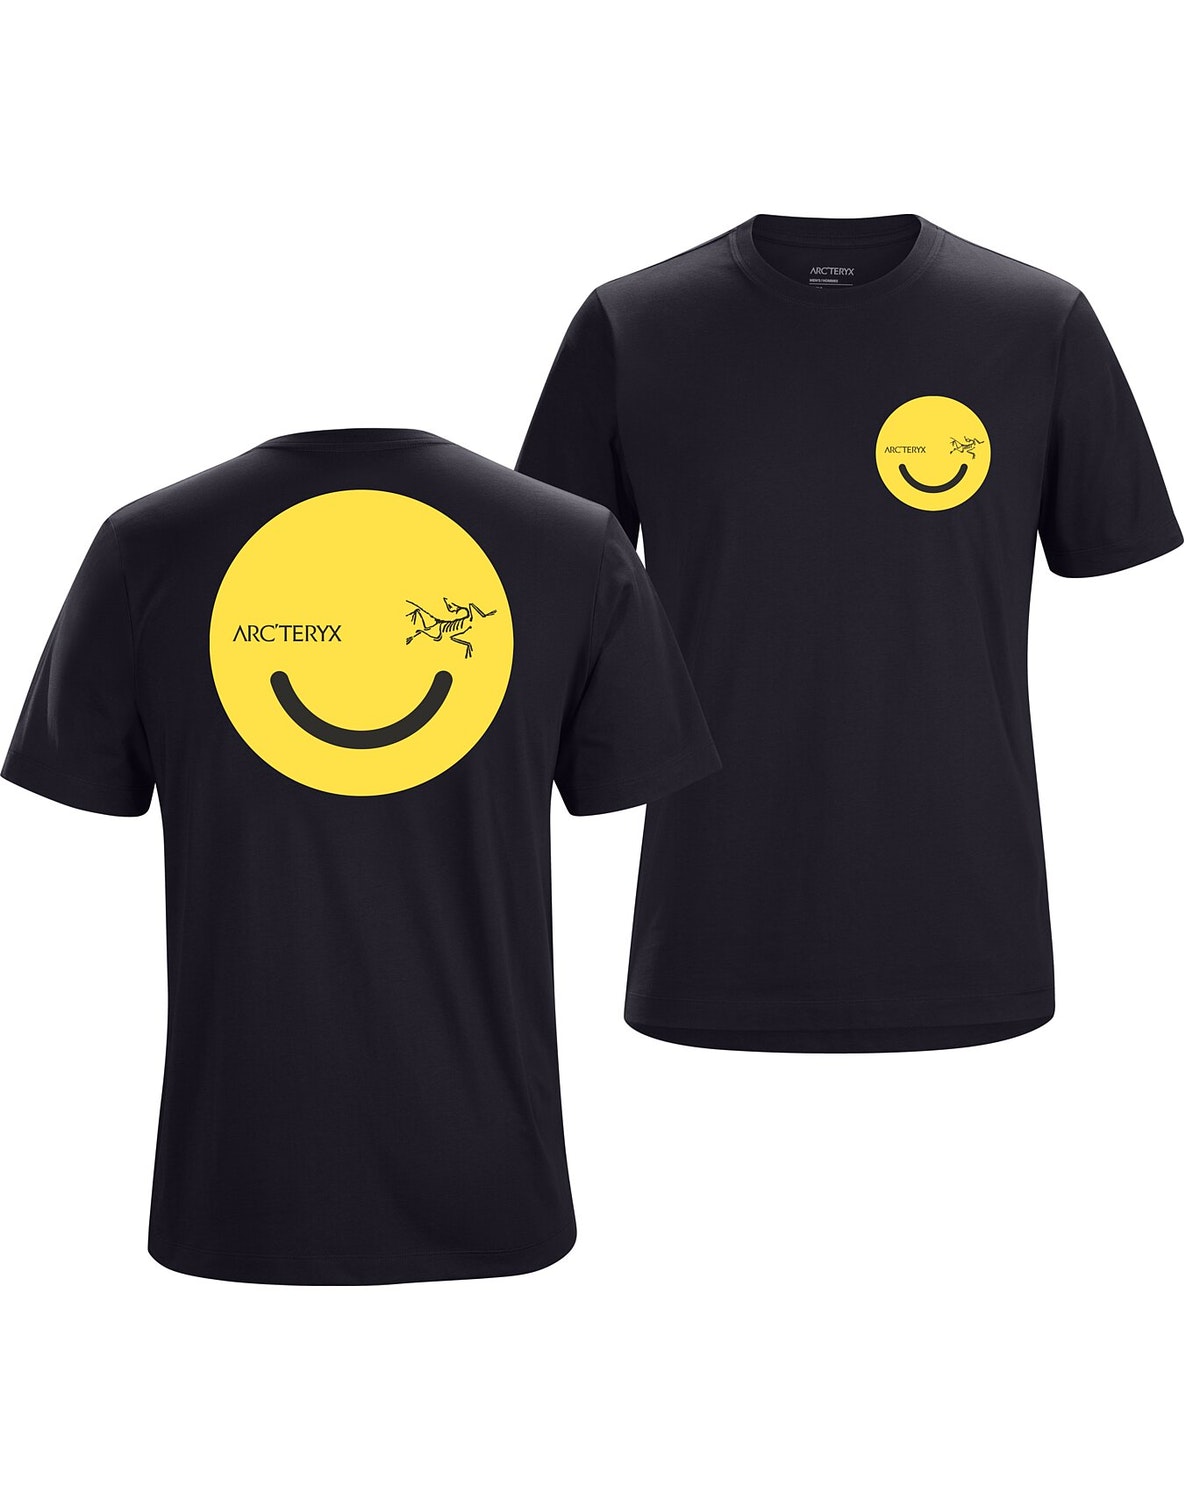 T-shirt Arc'teryx Just for Fun Uomo Nere - IT-79313513